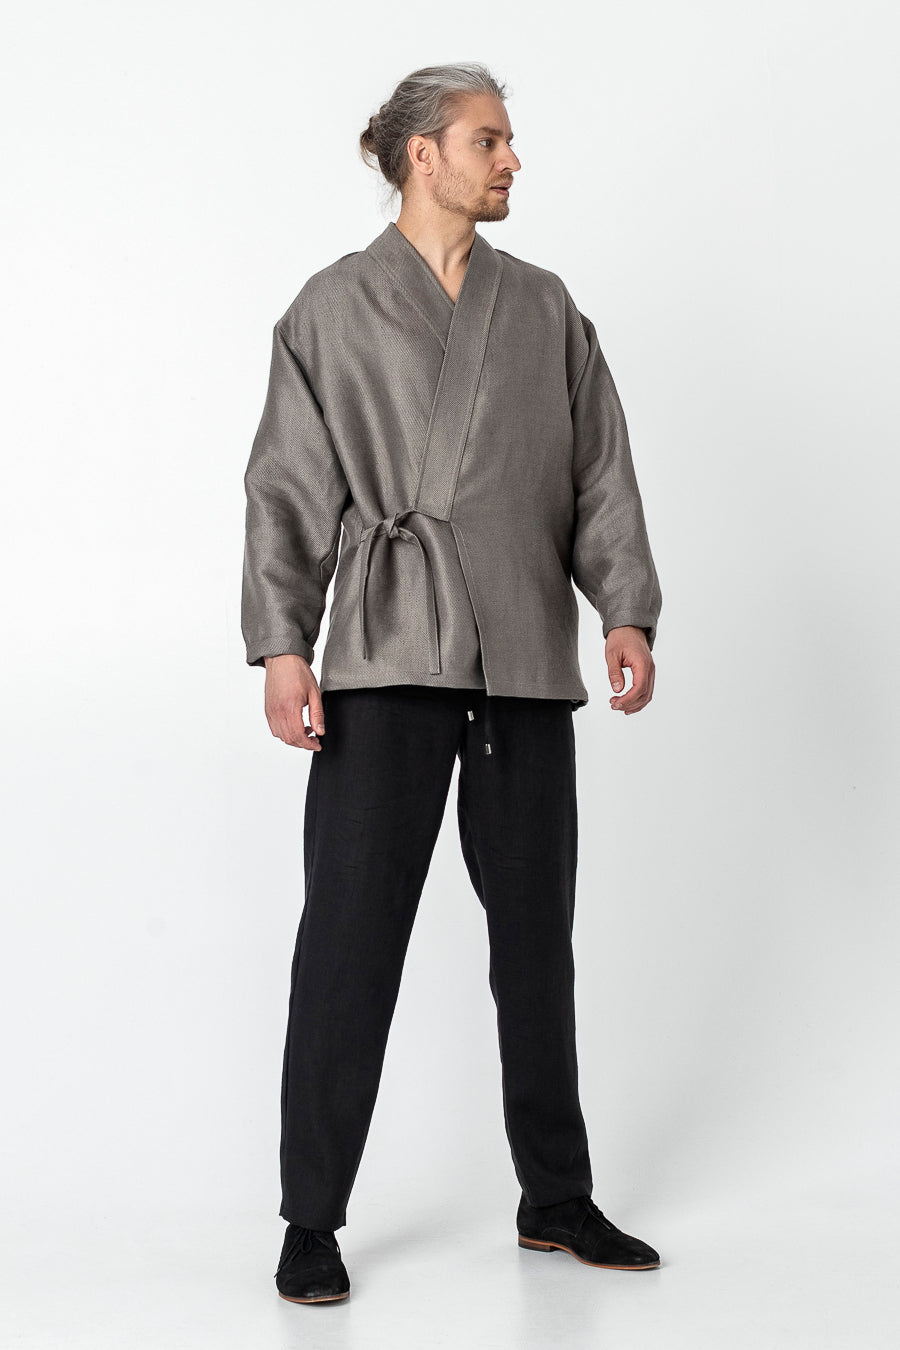 BOTAN | Linen jacket for men - Mezzoroni